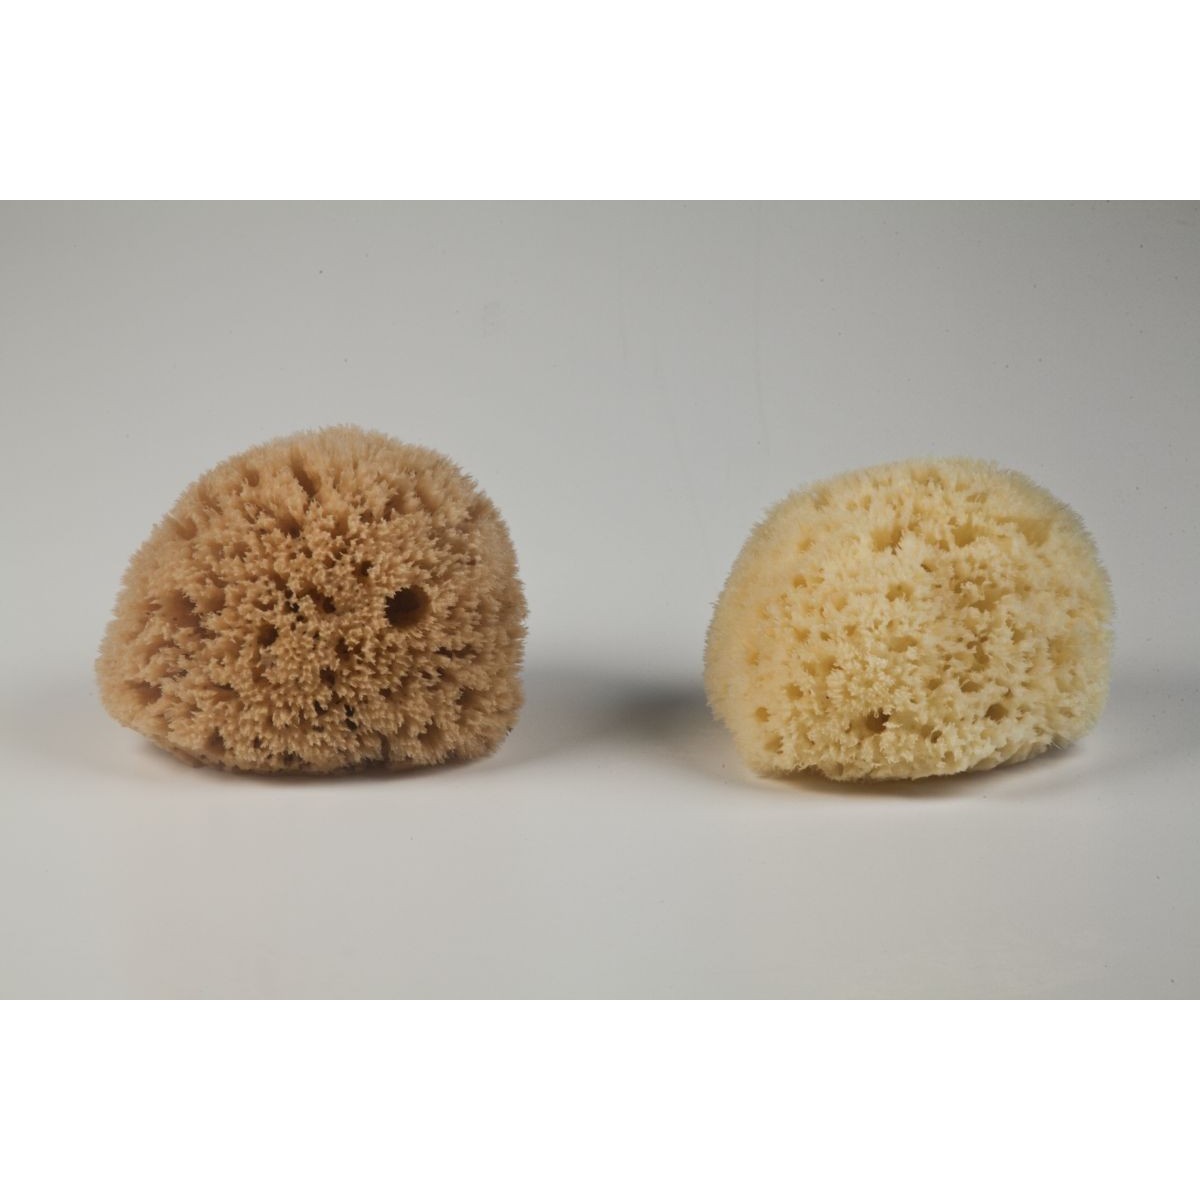 New Natural-Kalymnos-Greek-Sea-Sponge-Honeycomb & Soft Silk-Bath-Body EXCELLENT 